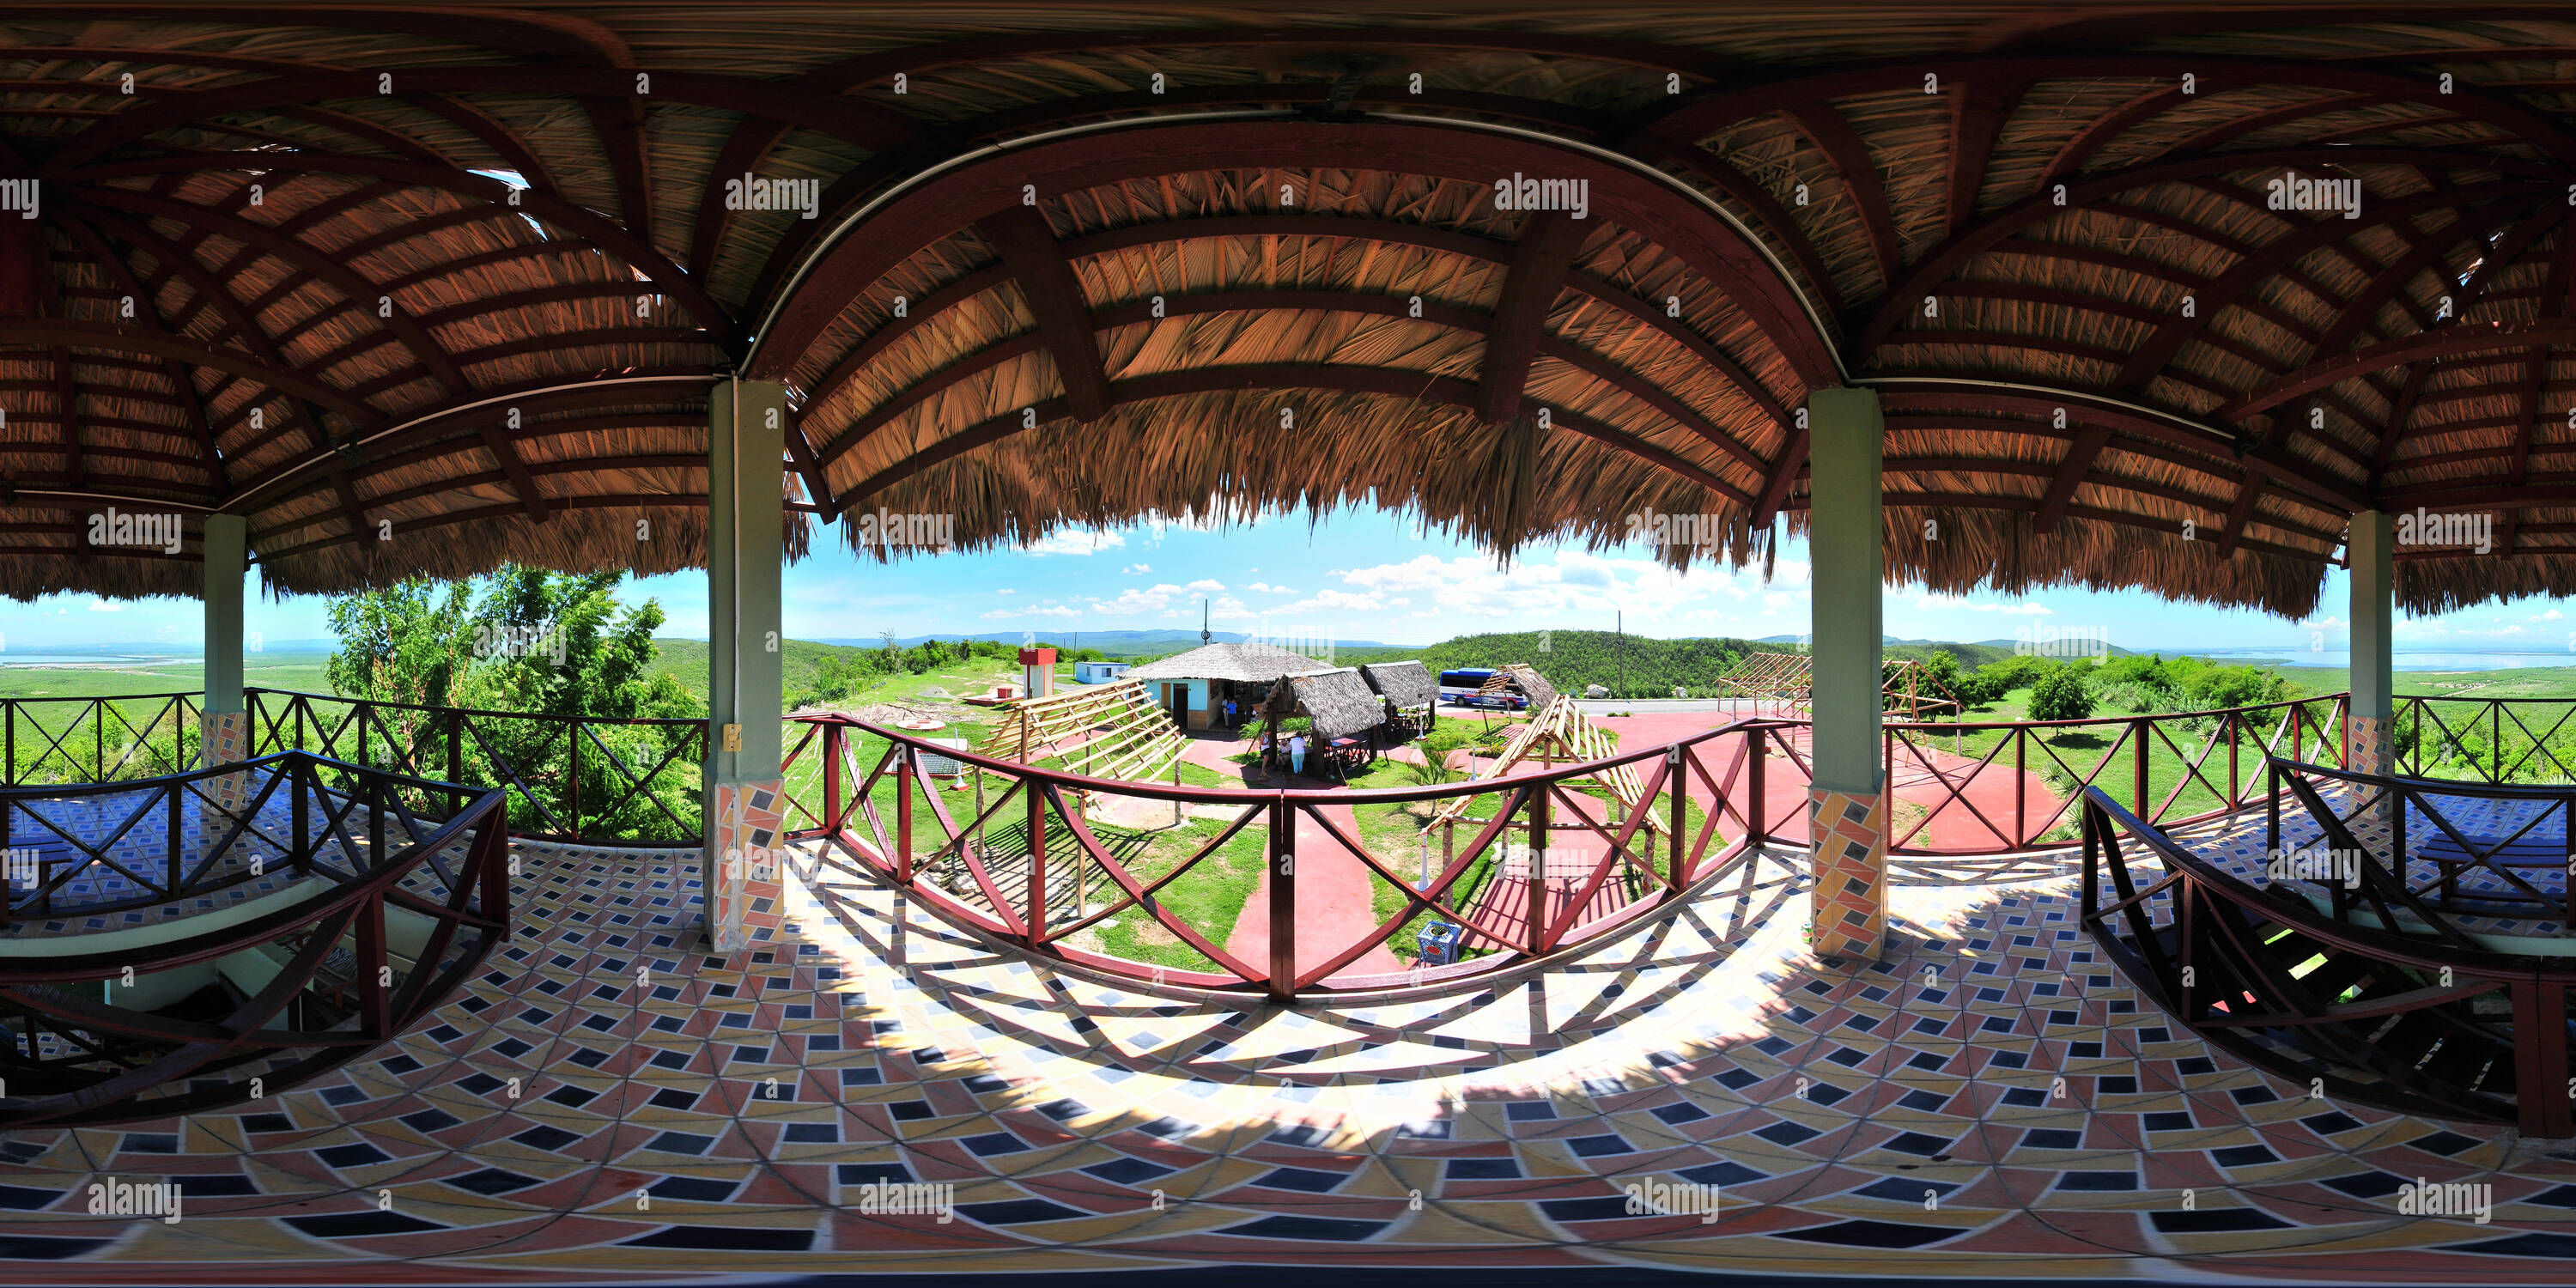 360 Grad Panorama Ansicht von Kuba - Guantanamo, Mirador la Gobernadora, Aussichtsturm